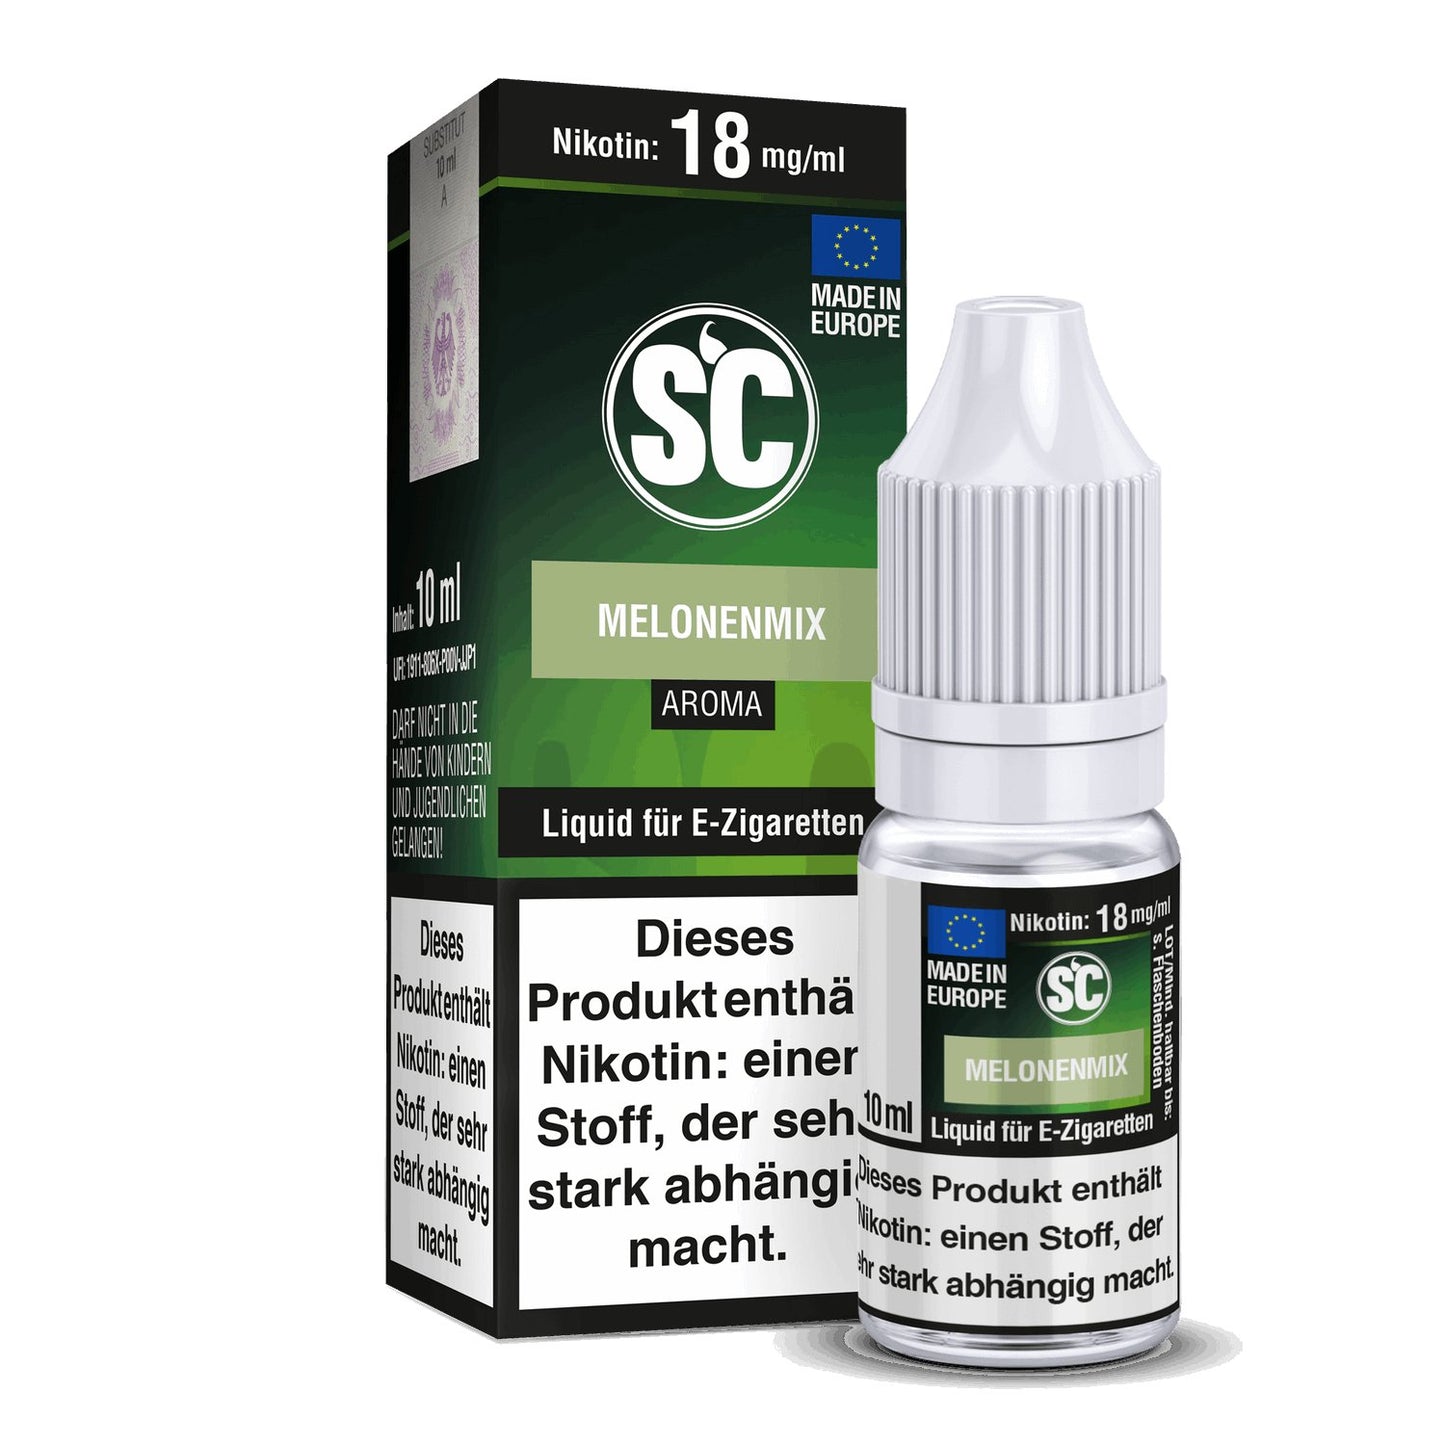 SC - Melonenmix - 10ml Fertigliquid (Nikotinfrei/Nikotin)Melonenmix E-Zigaretten Liquid - 1er Packung 12 mg/ml - Vapes4you